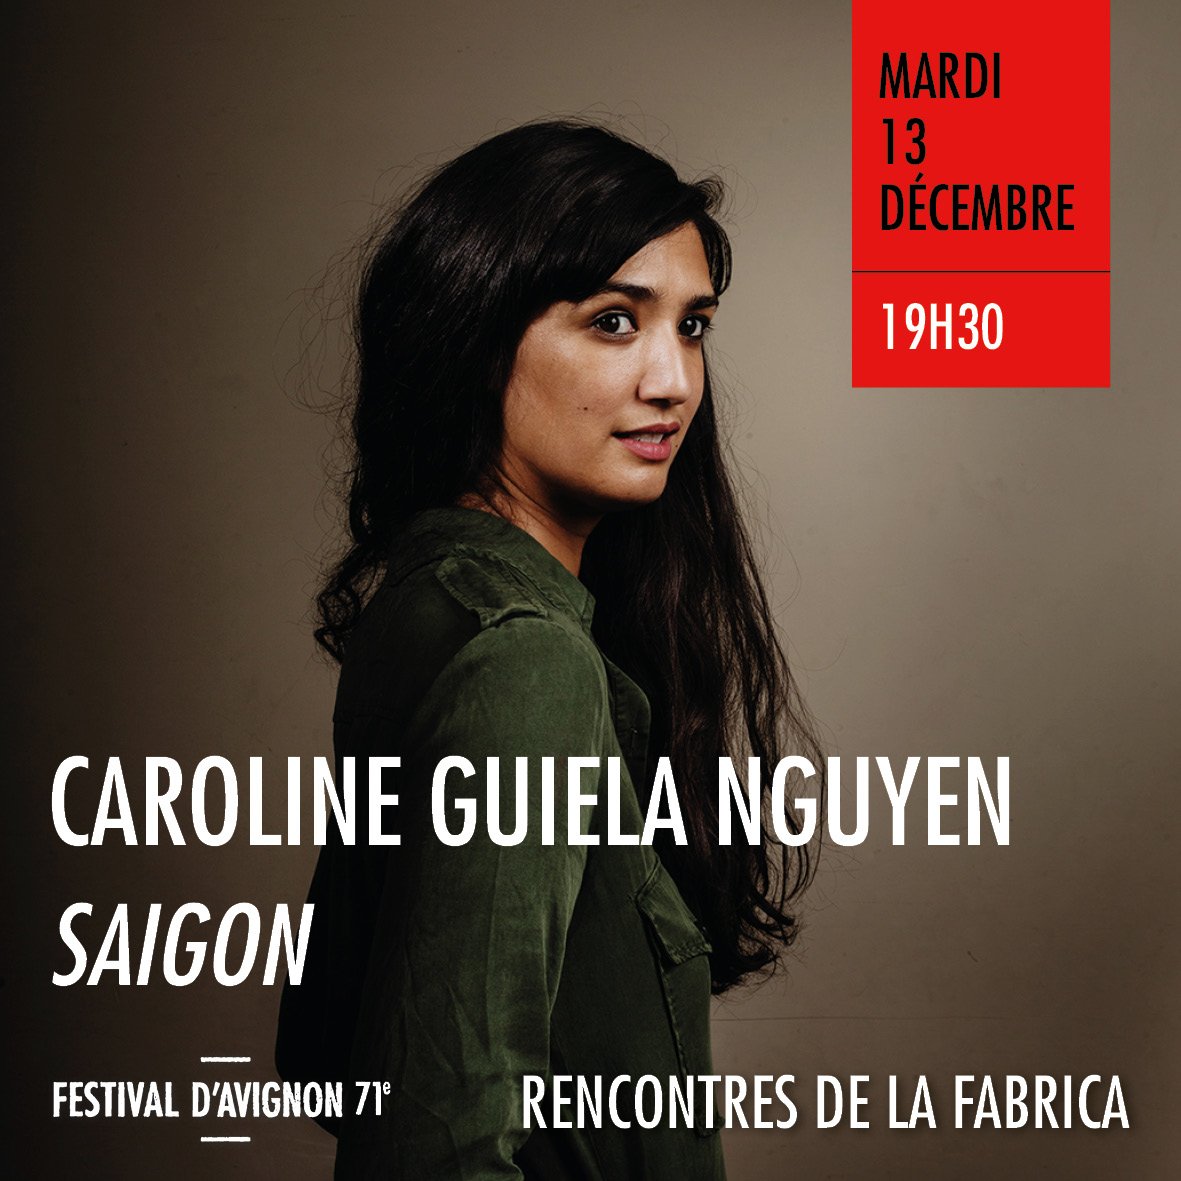 Prochaine rencontre de la FabricA du @FestivalAvignon avec @CarolineGuiela sur SAIGON : mardi 13 déc. 19h30 festival-avignon.com/fr/ateliers-de… #FDA17